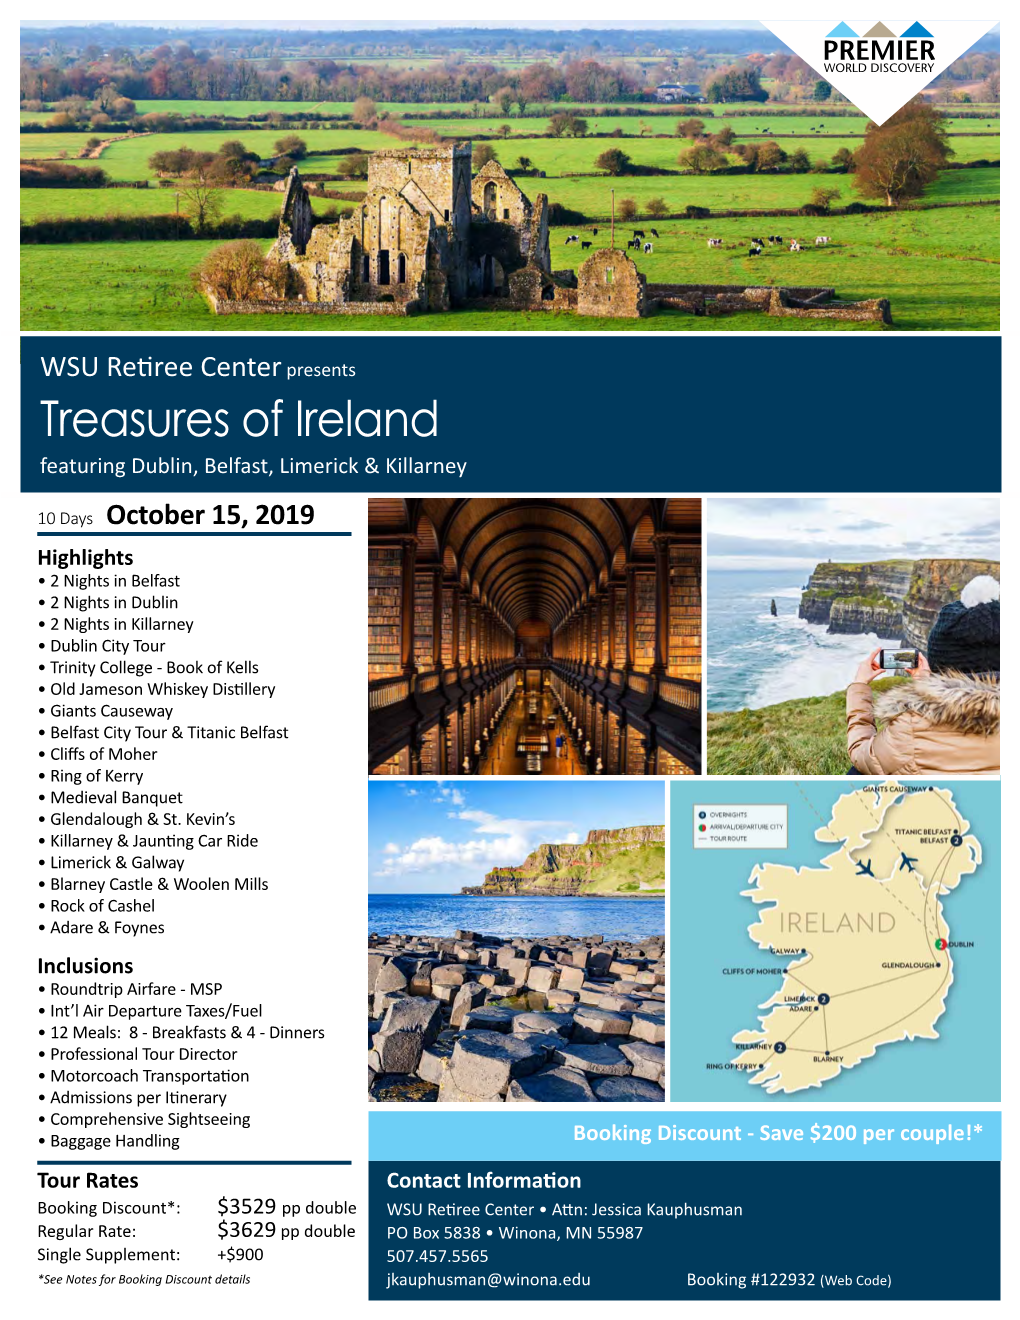 Treasures of Ireland Featuring Dublin, Belfast, Limerick & Killarney